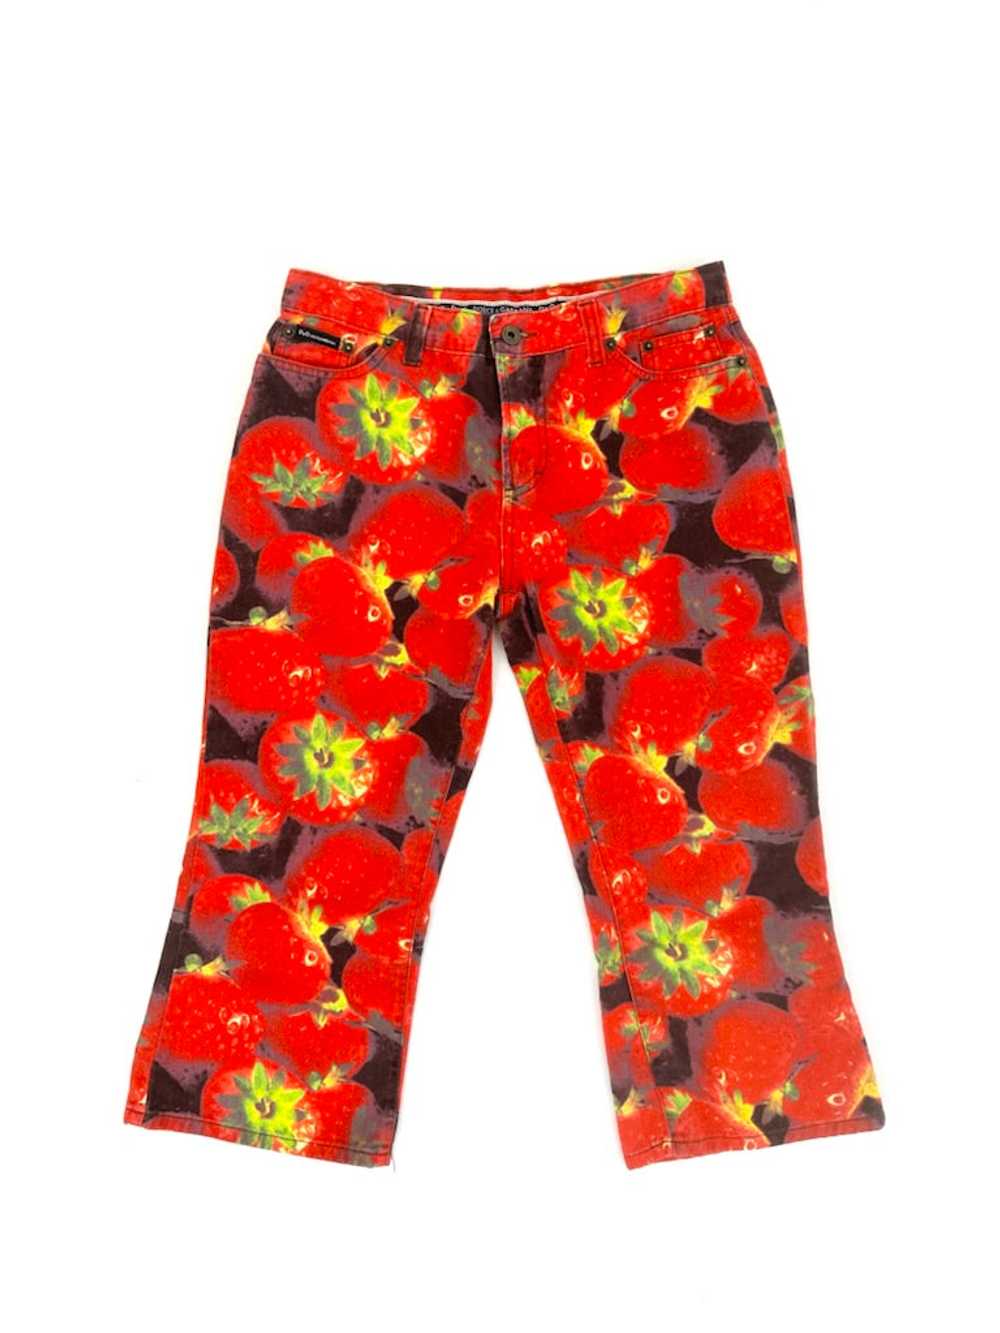 90s D&G Strawberry Print Pants - image 4